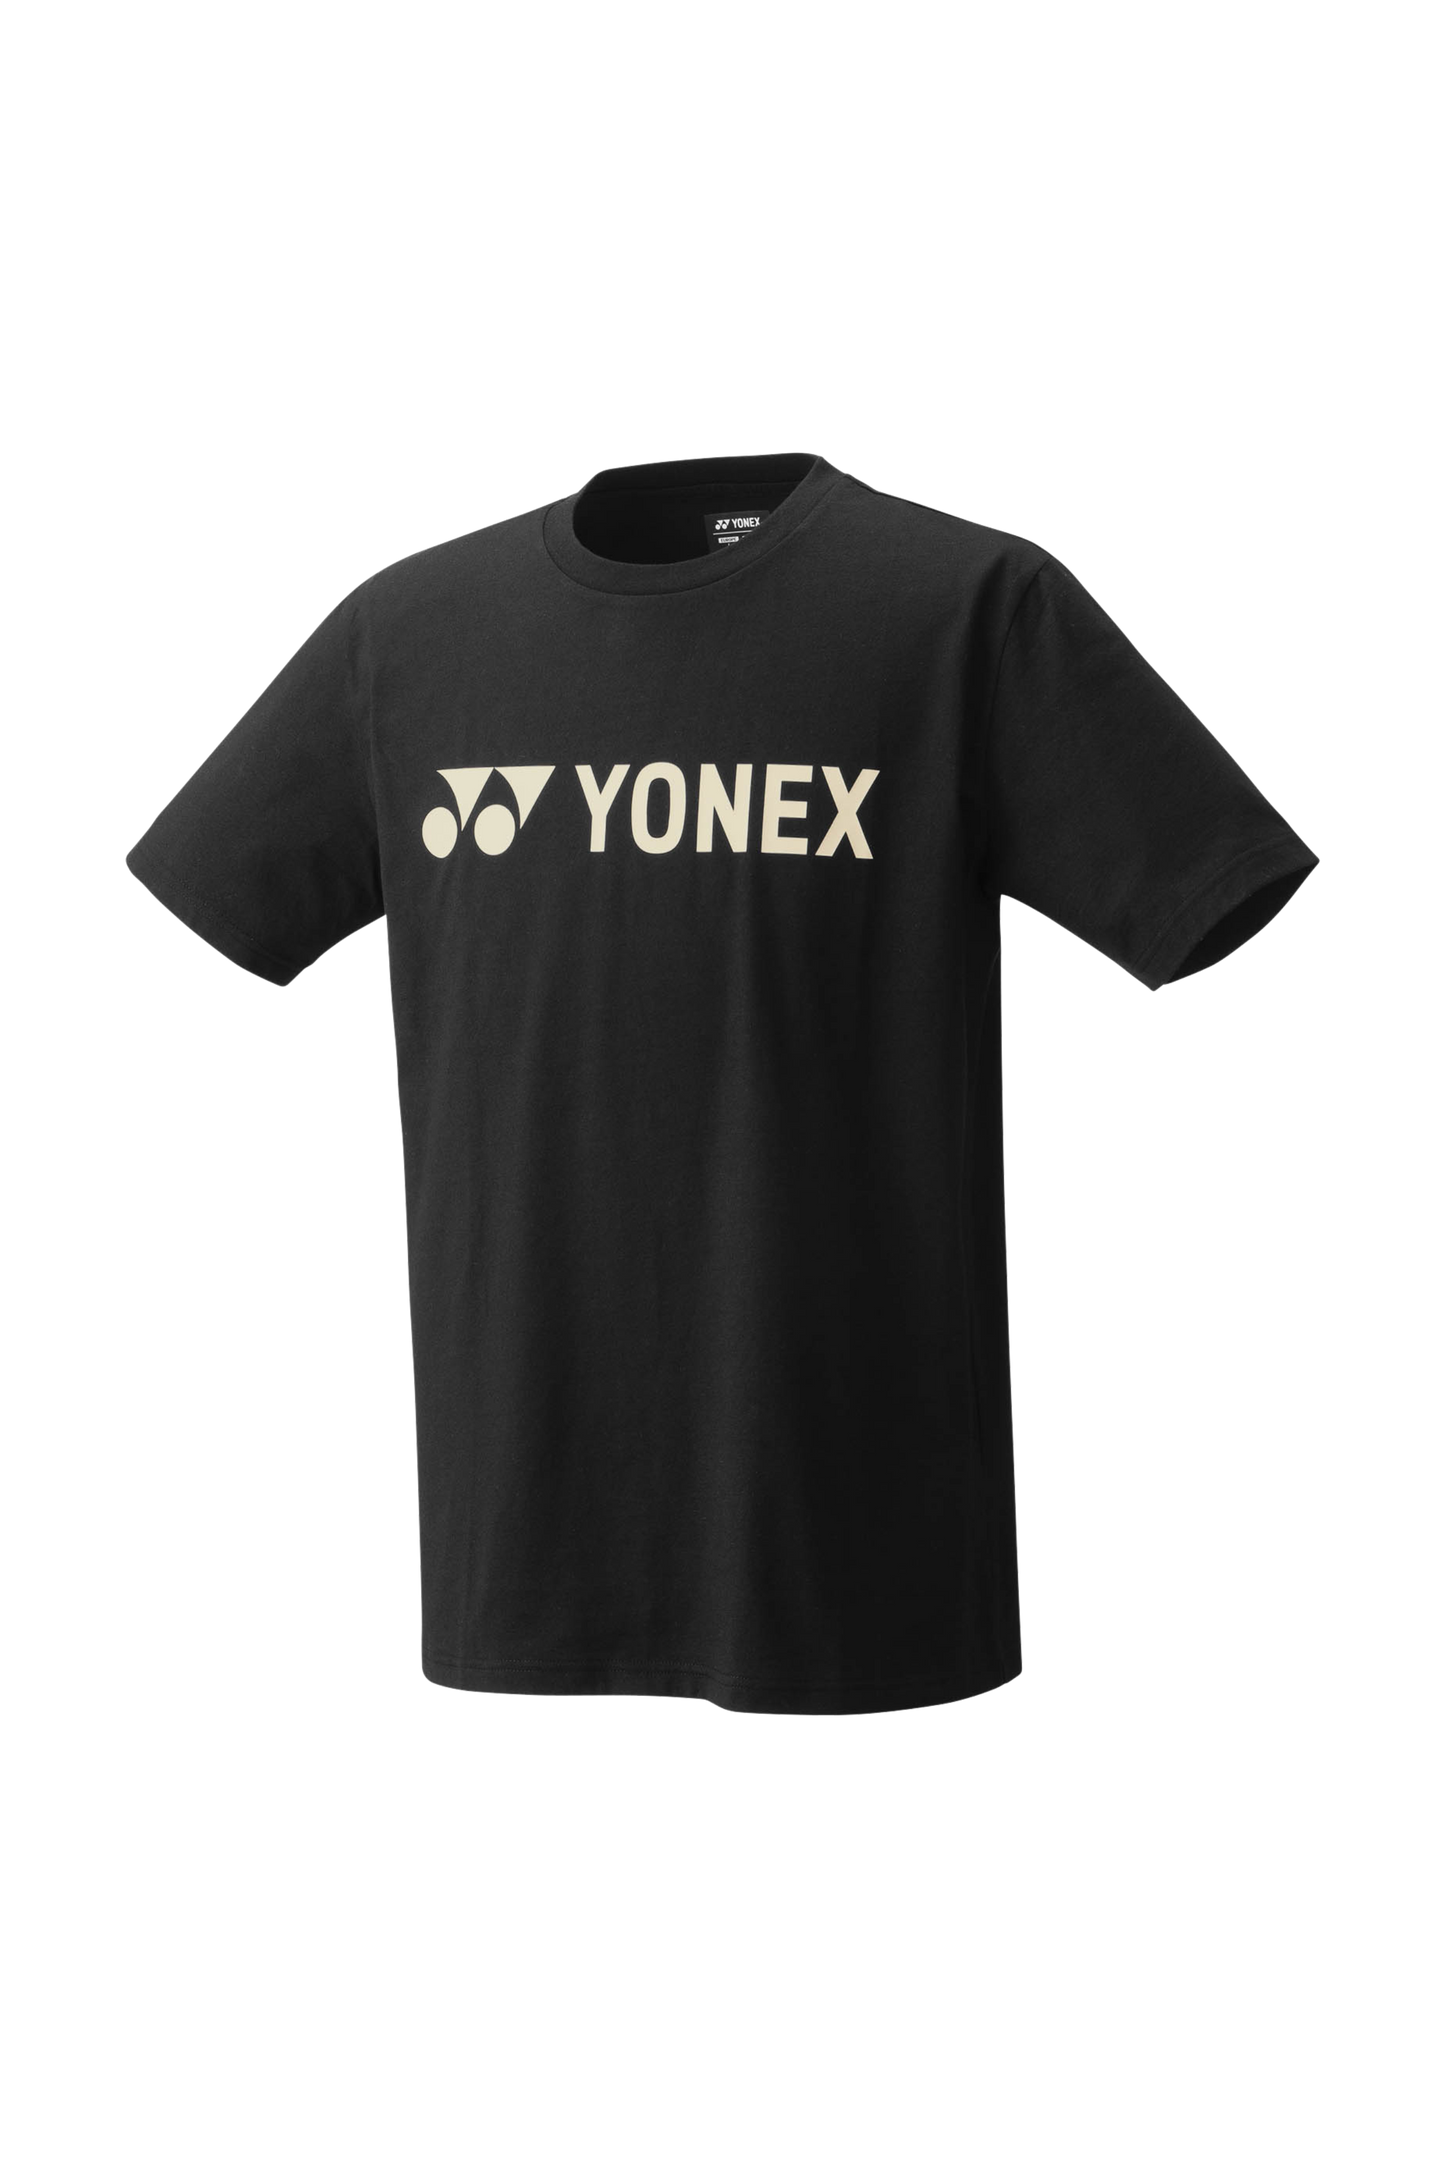 YONEX Unisex T-Shirts 16680 - Max Sports